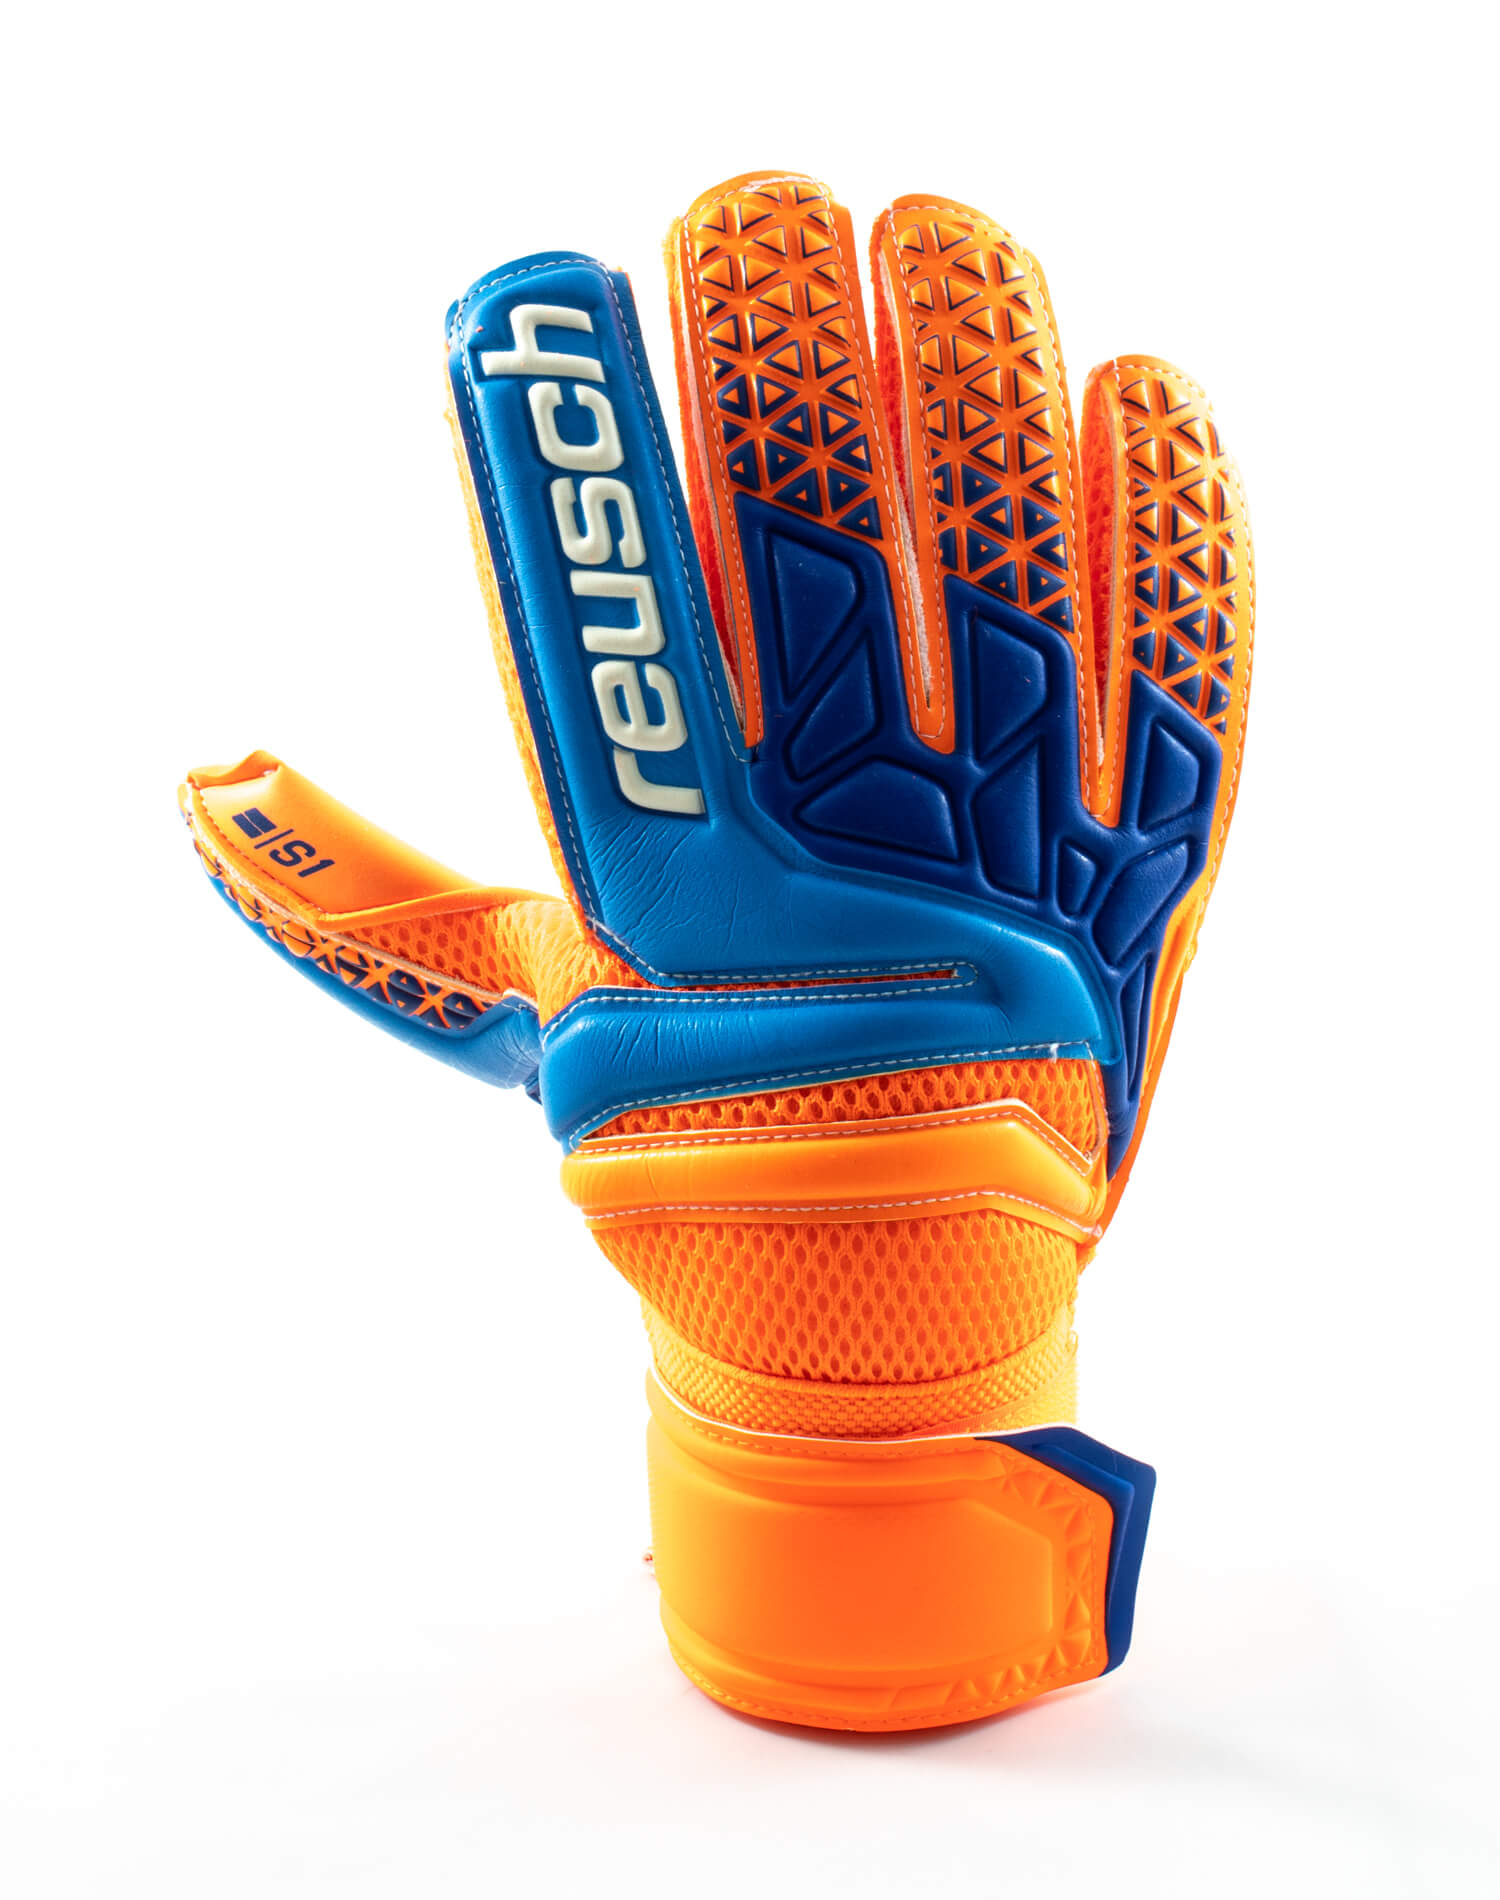 Guantes Reusch Prisma S1 Naranja - Azul - Golero Sport